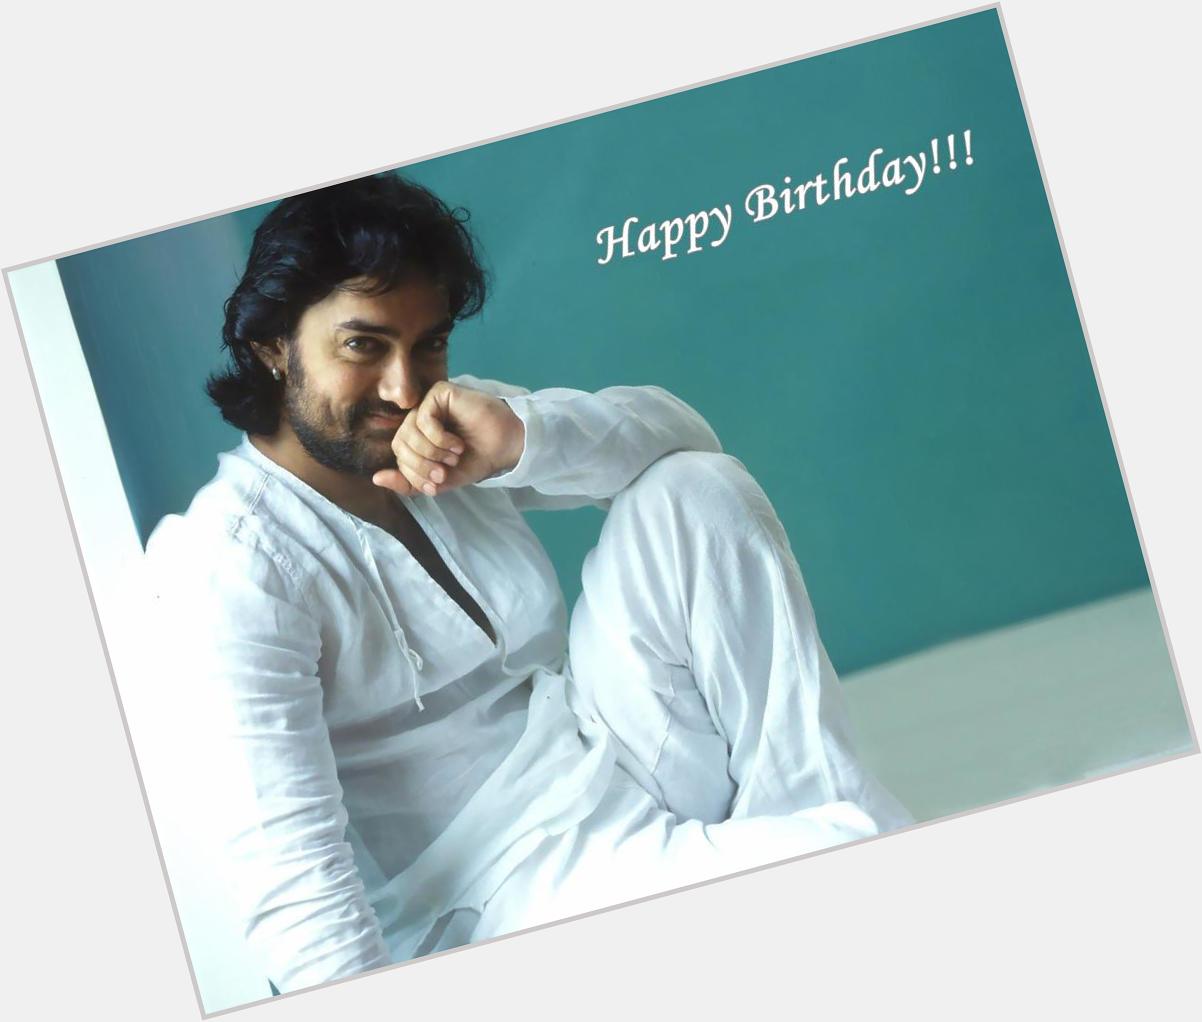 We wish Aamir Khan a very Happy Birthday!  
Watch his movies Andaz Apna Apna, PK & more here:  